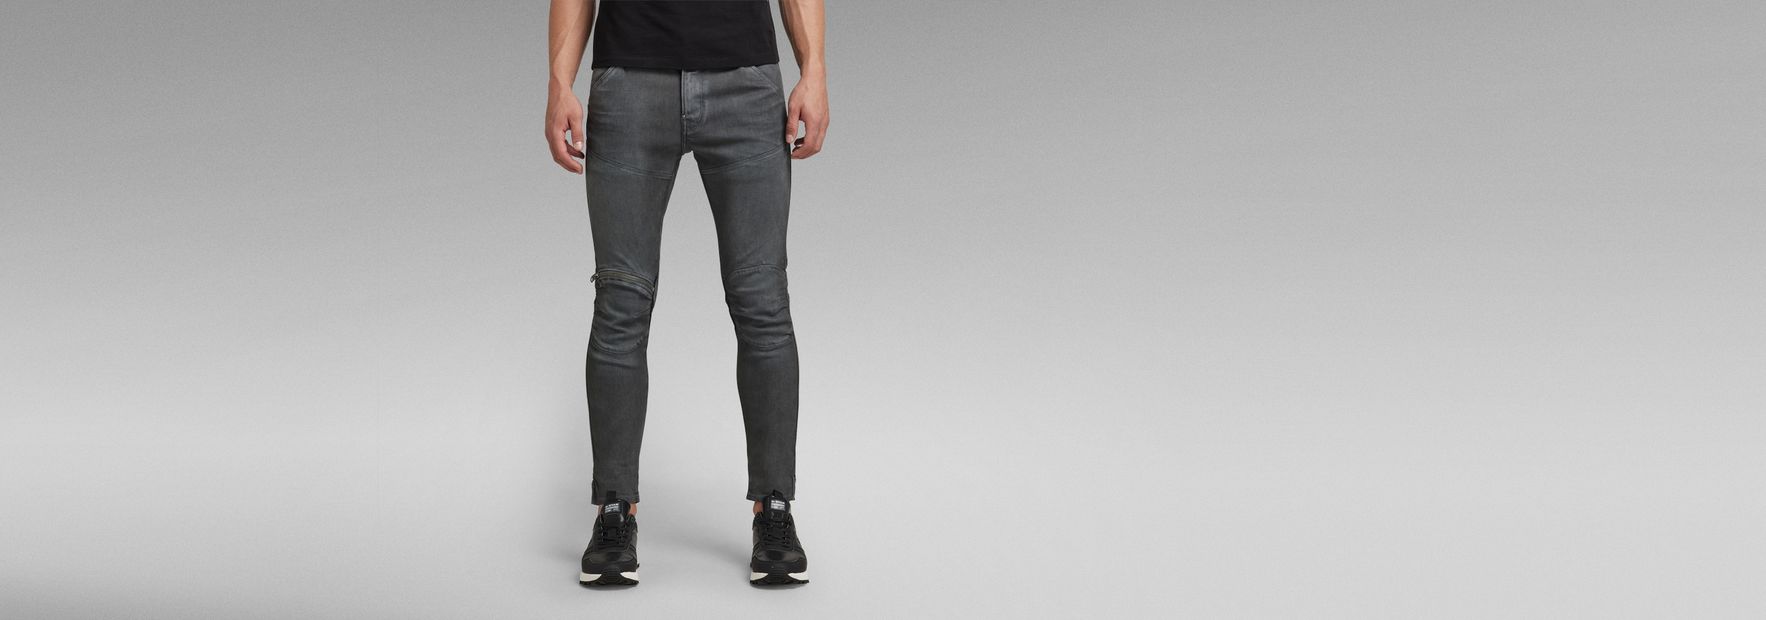 Zip Jeans | Knee G-Star | Grey 3D RAW® US Skinny 5620